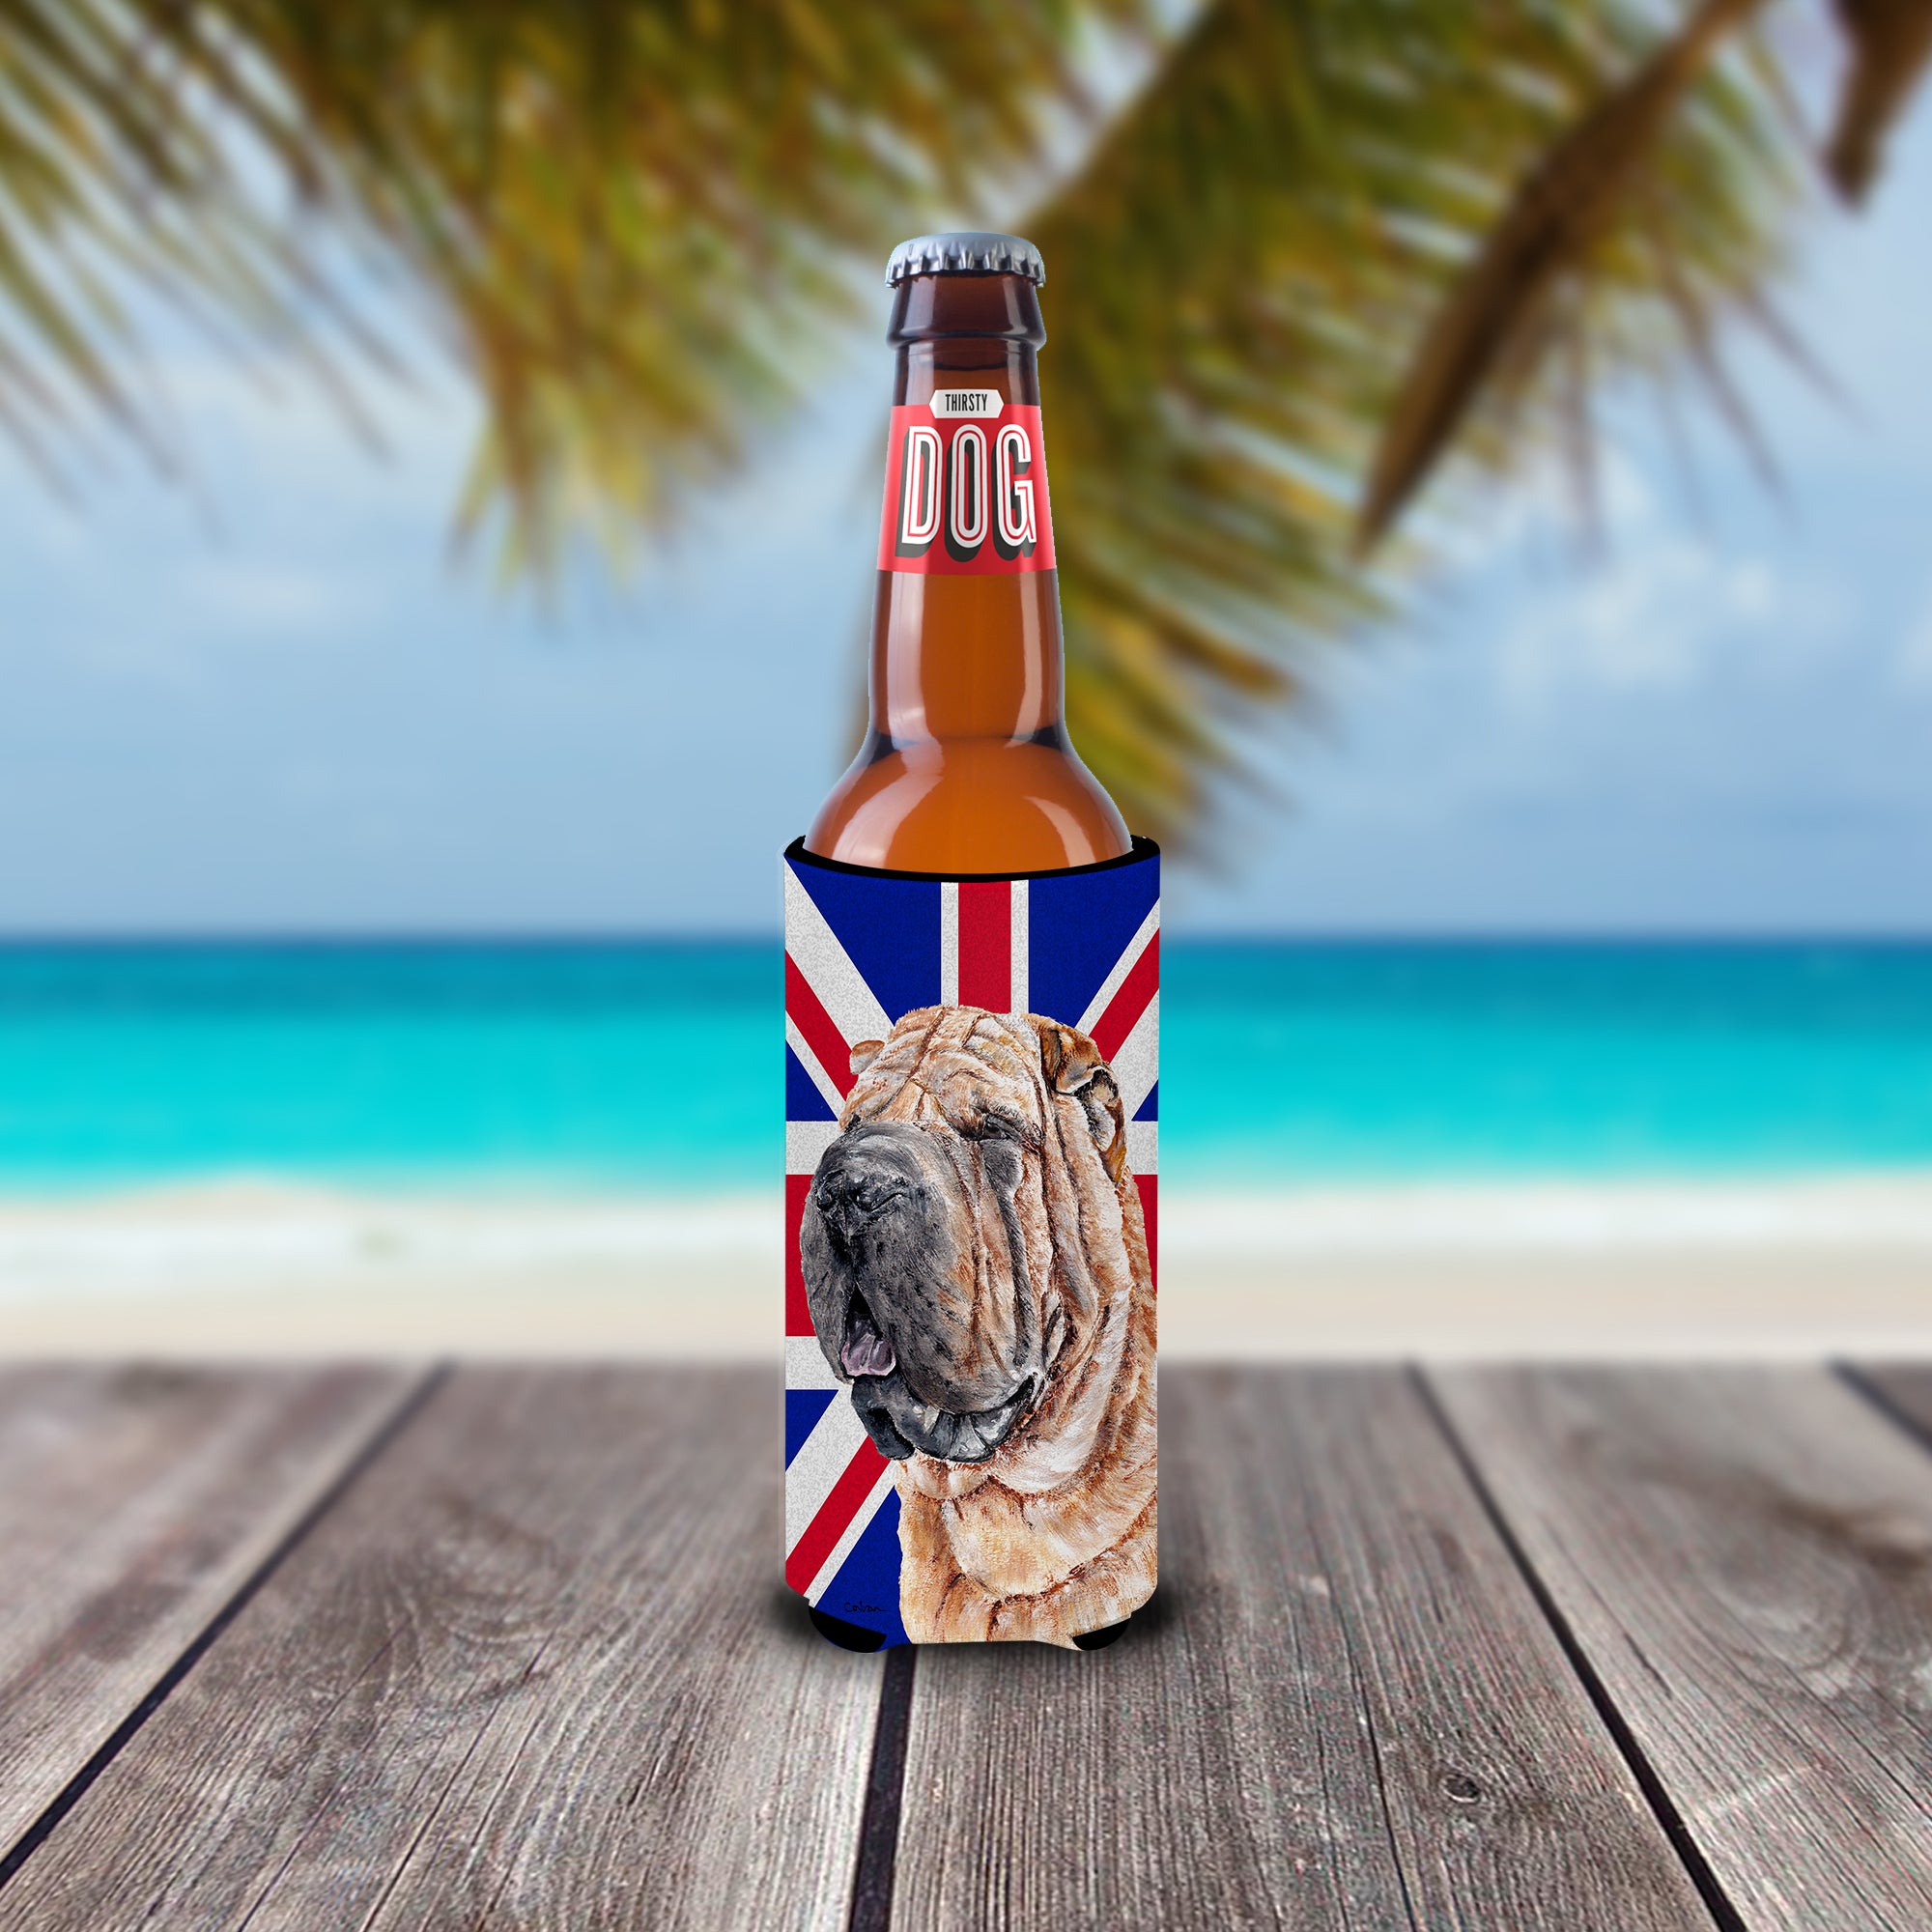 Shar Pei with English Union Jack British Flag Ultra Beverage Insulators for slim cans SC9892MUK.